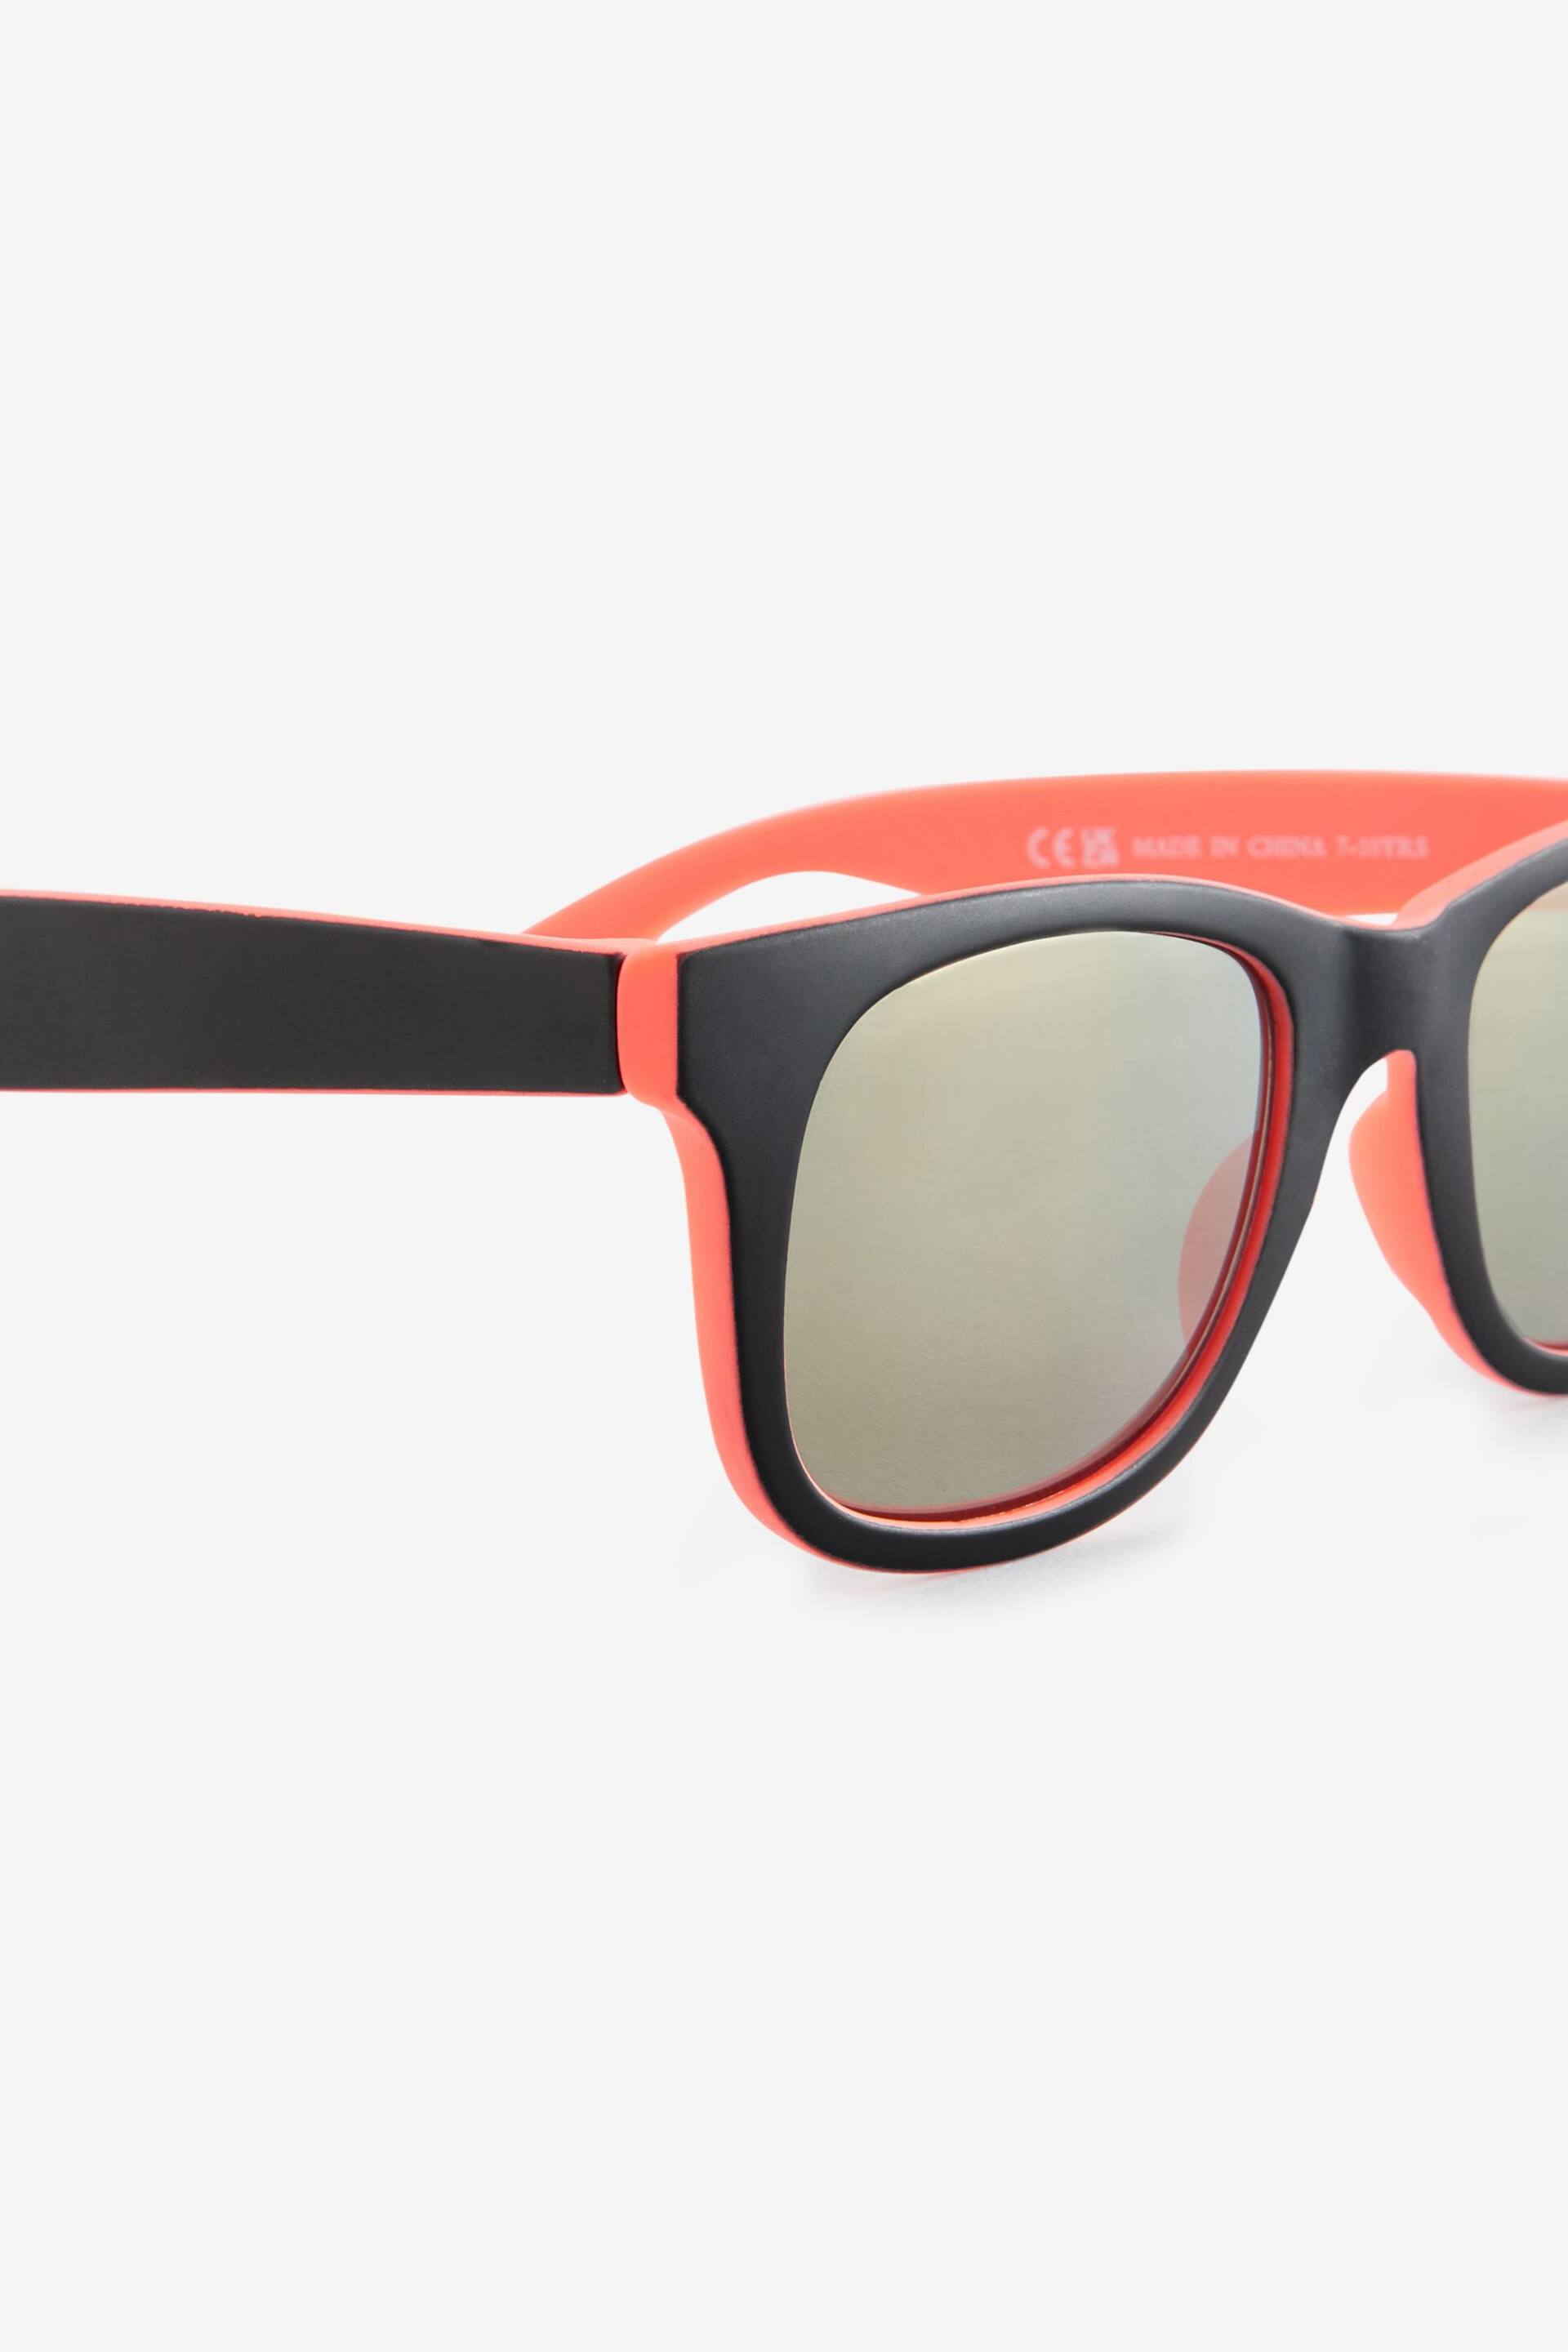 Black/Coral Preppy Sunglasses - Image 3 of 3